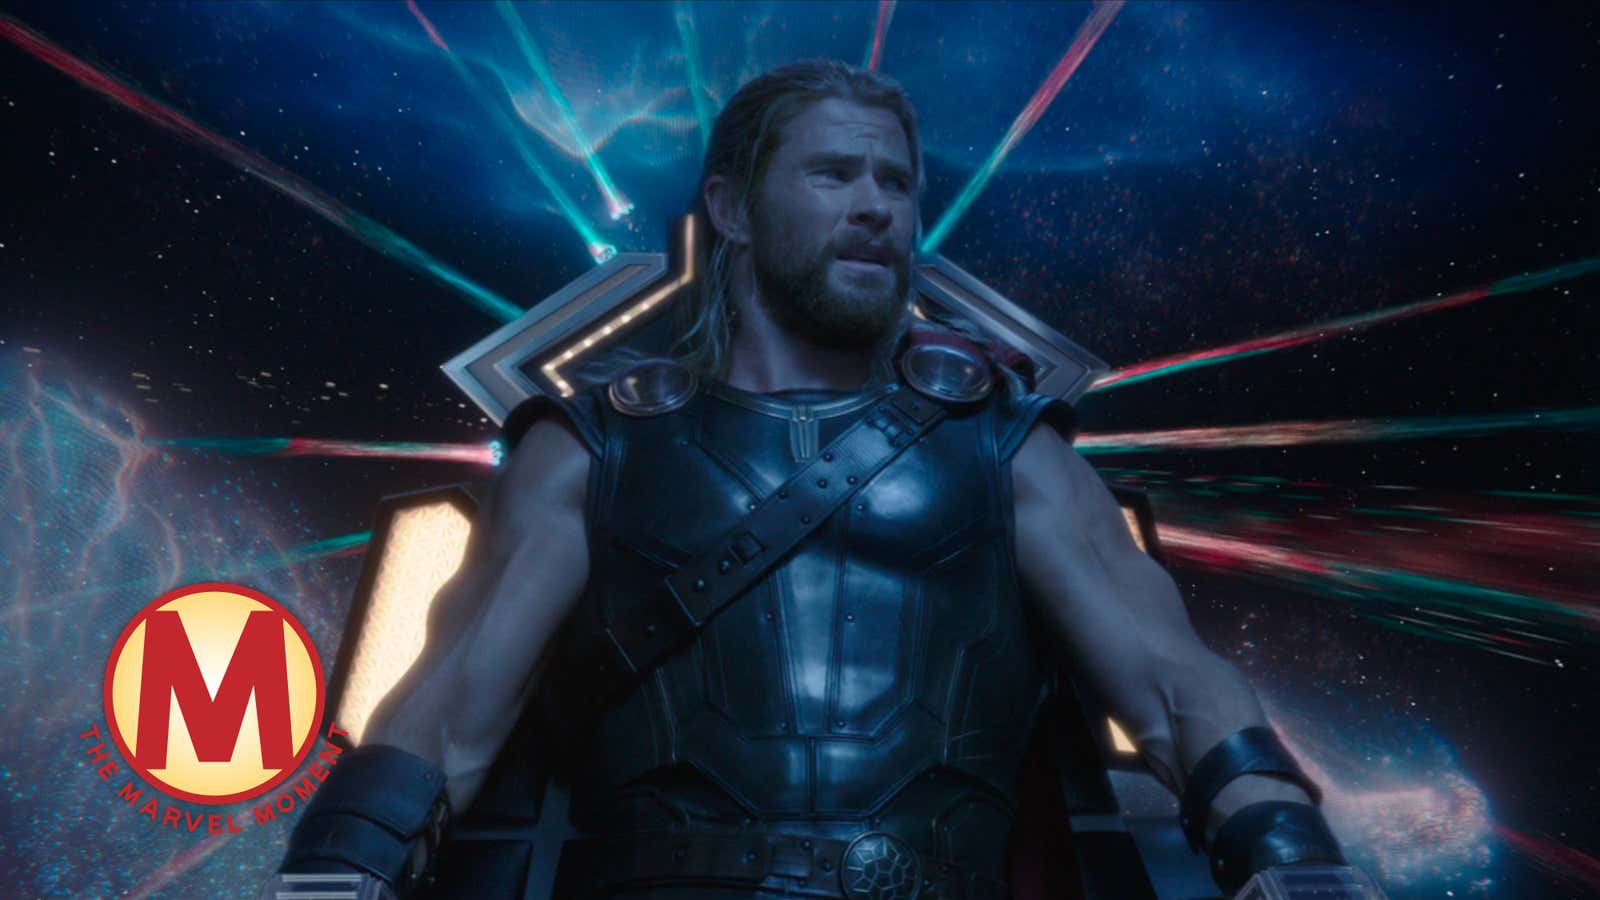 <i>Thor: Ragnarok</i> inventively put the “universe” into Marvel Cinematic Universe